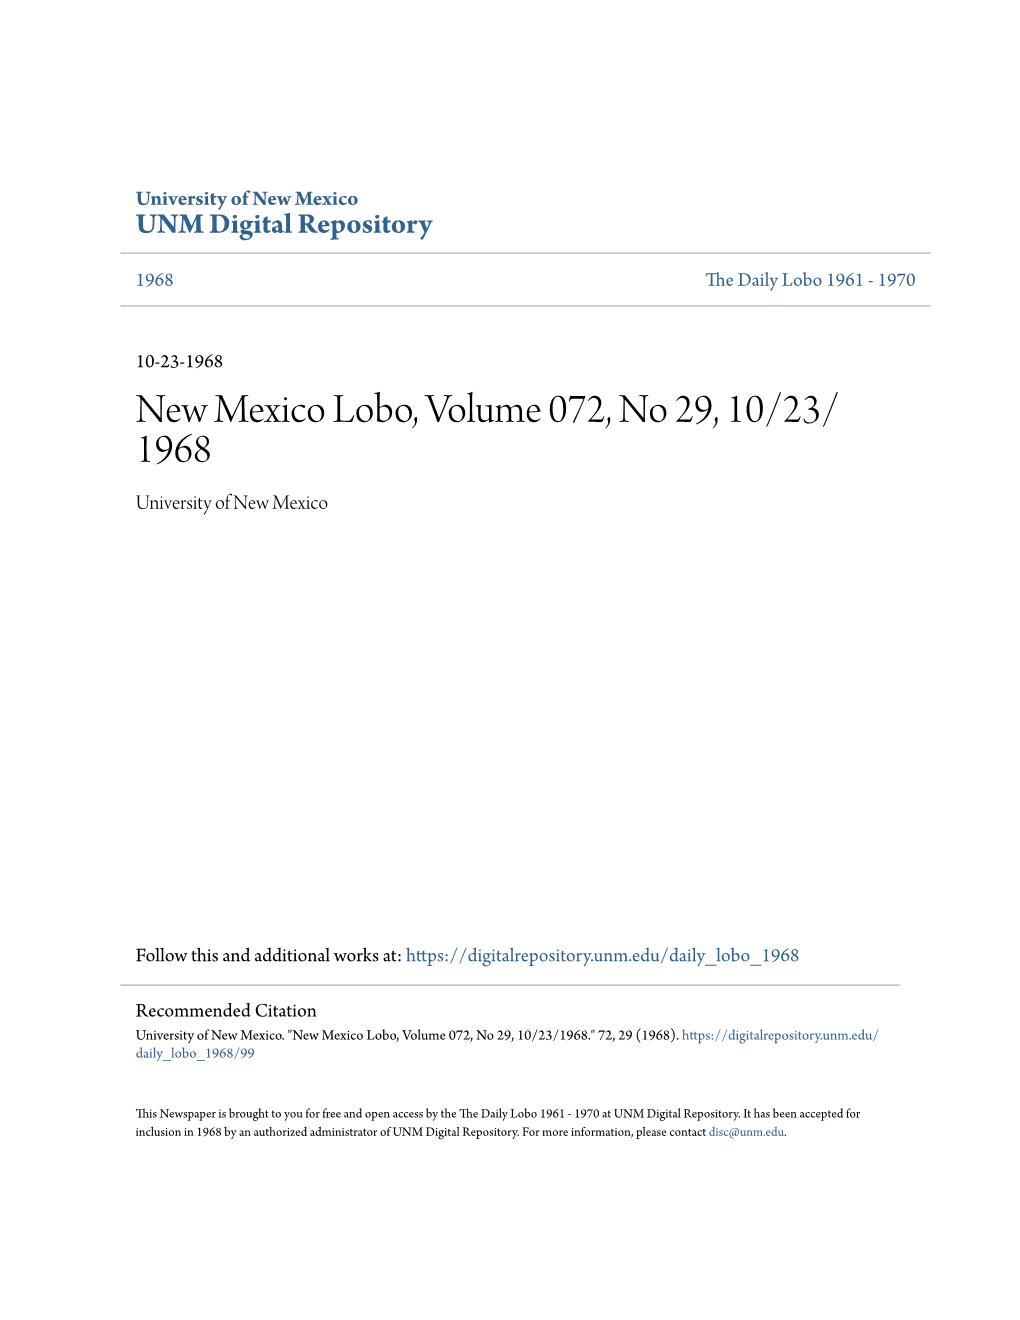 New Mexico Lobo, Volume 072, No 29, 10/23/1968." 72, 29 (1968)